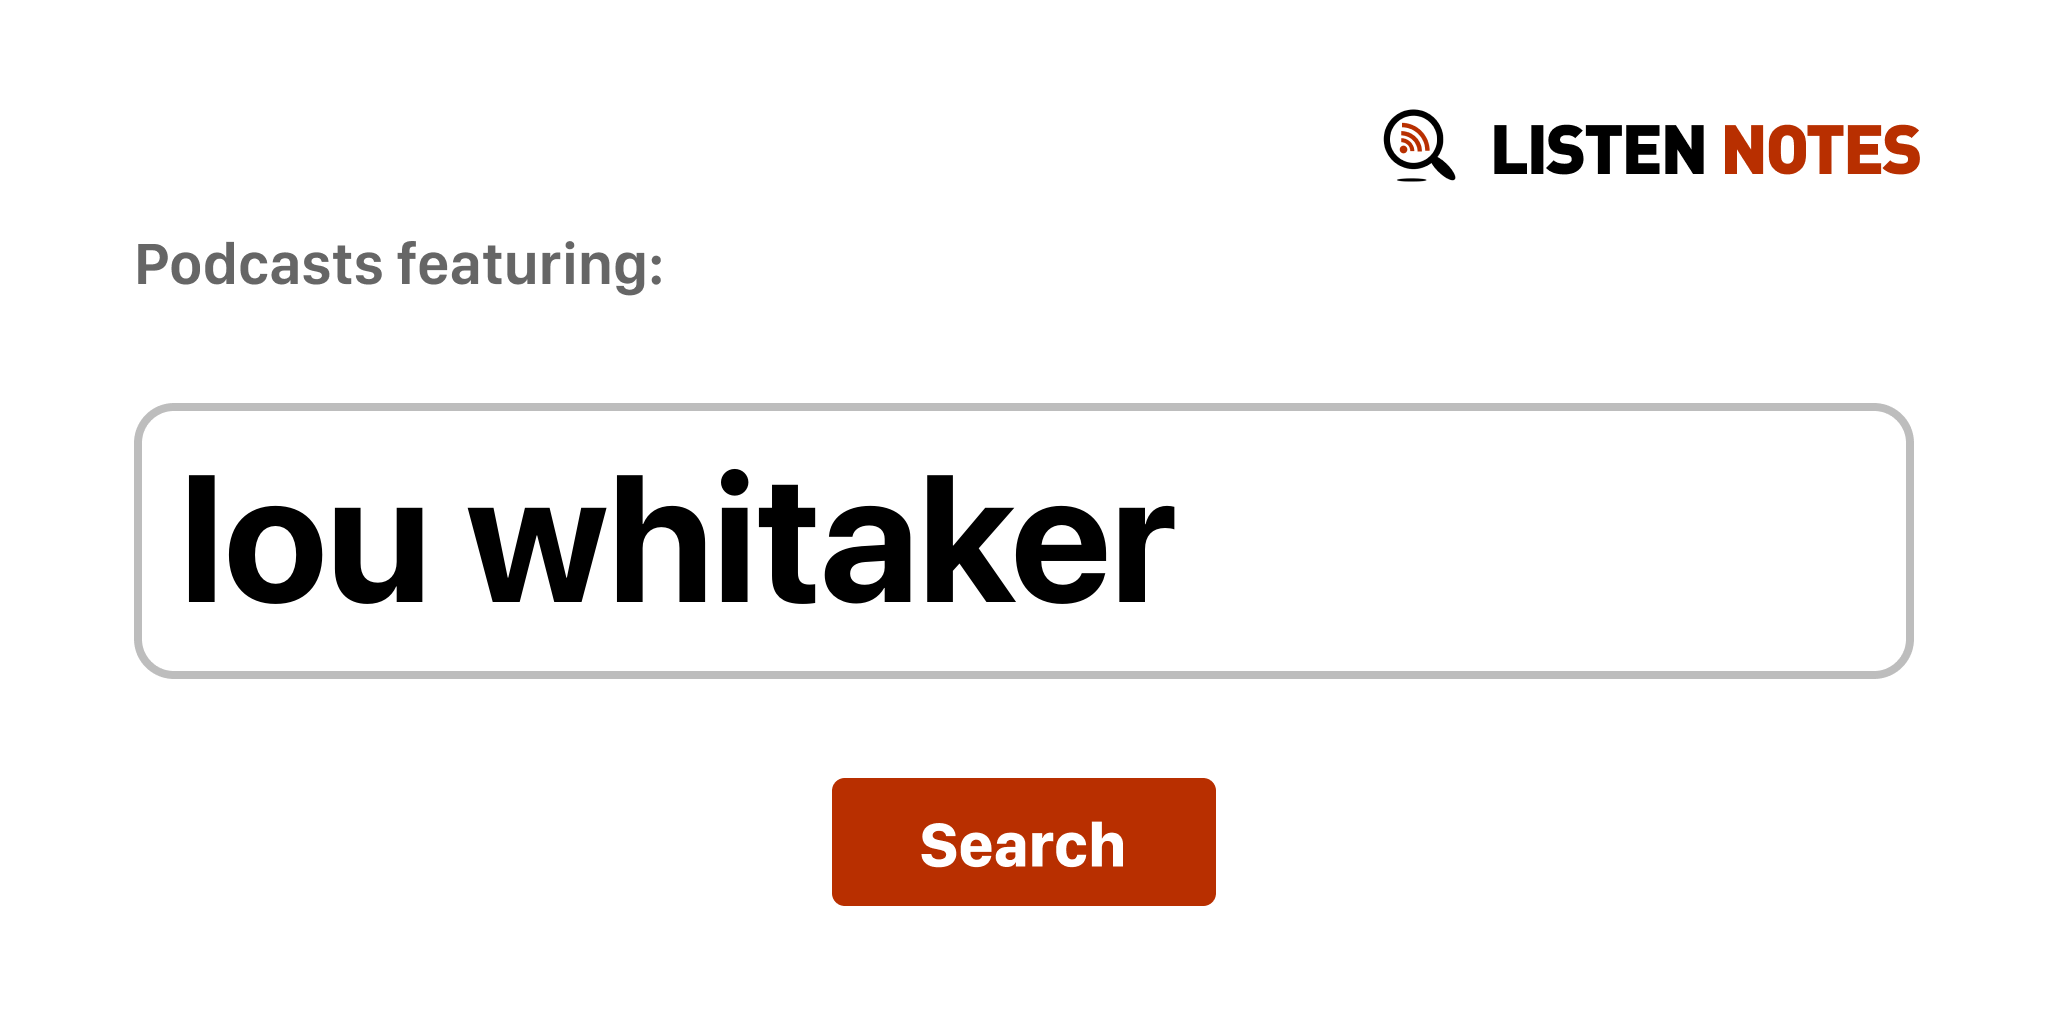 Lou Whitaker - Wikipedia